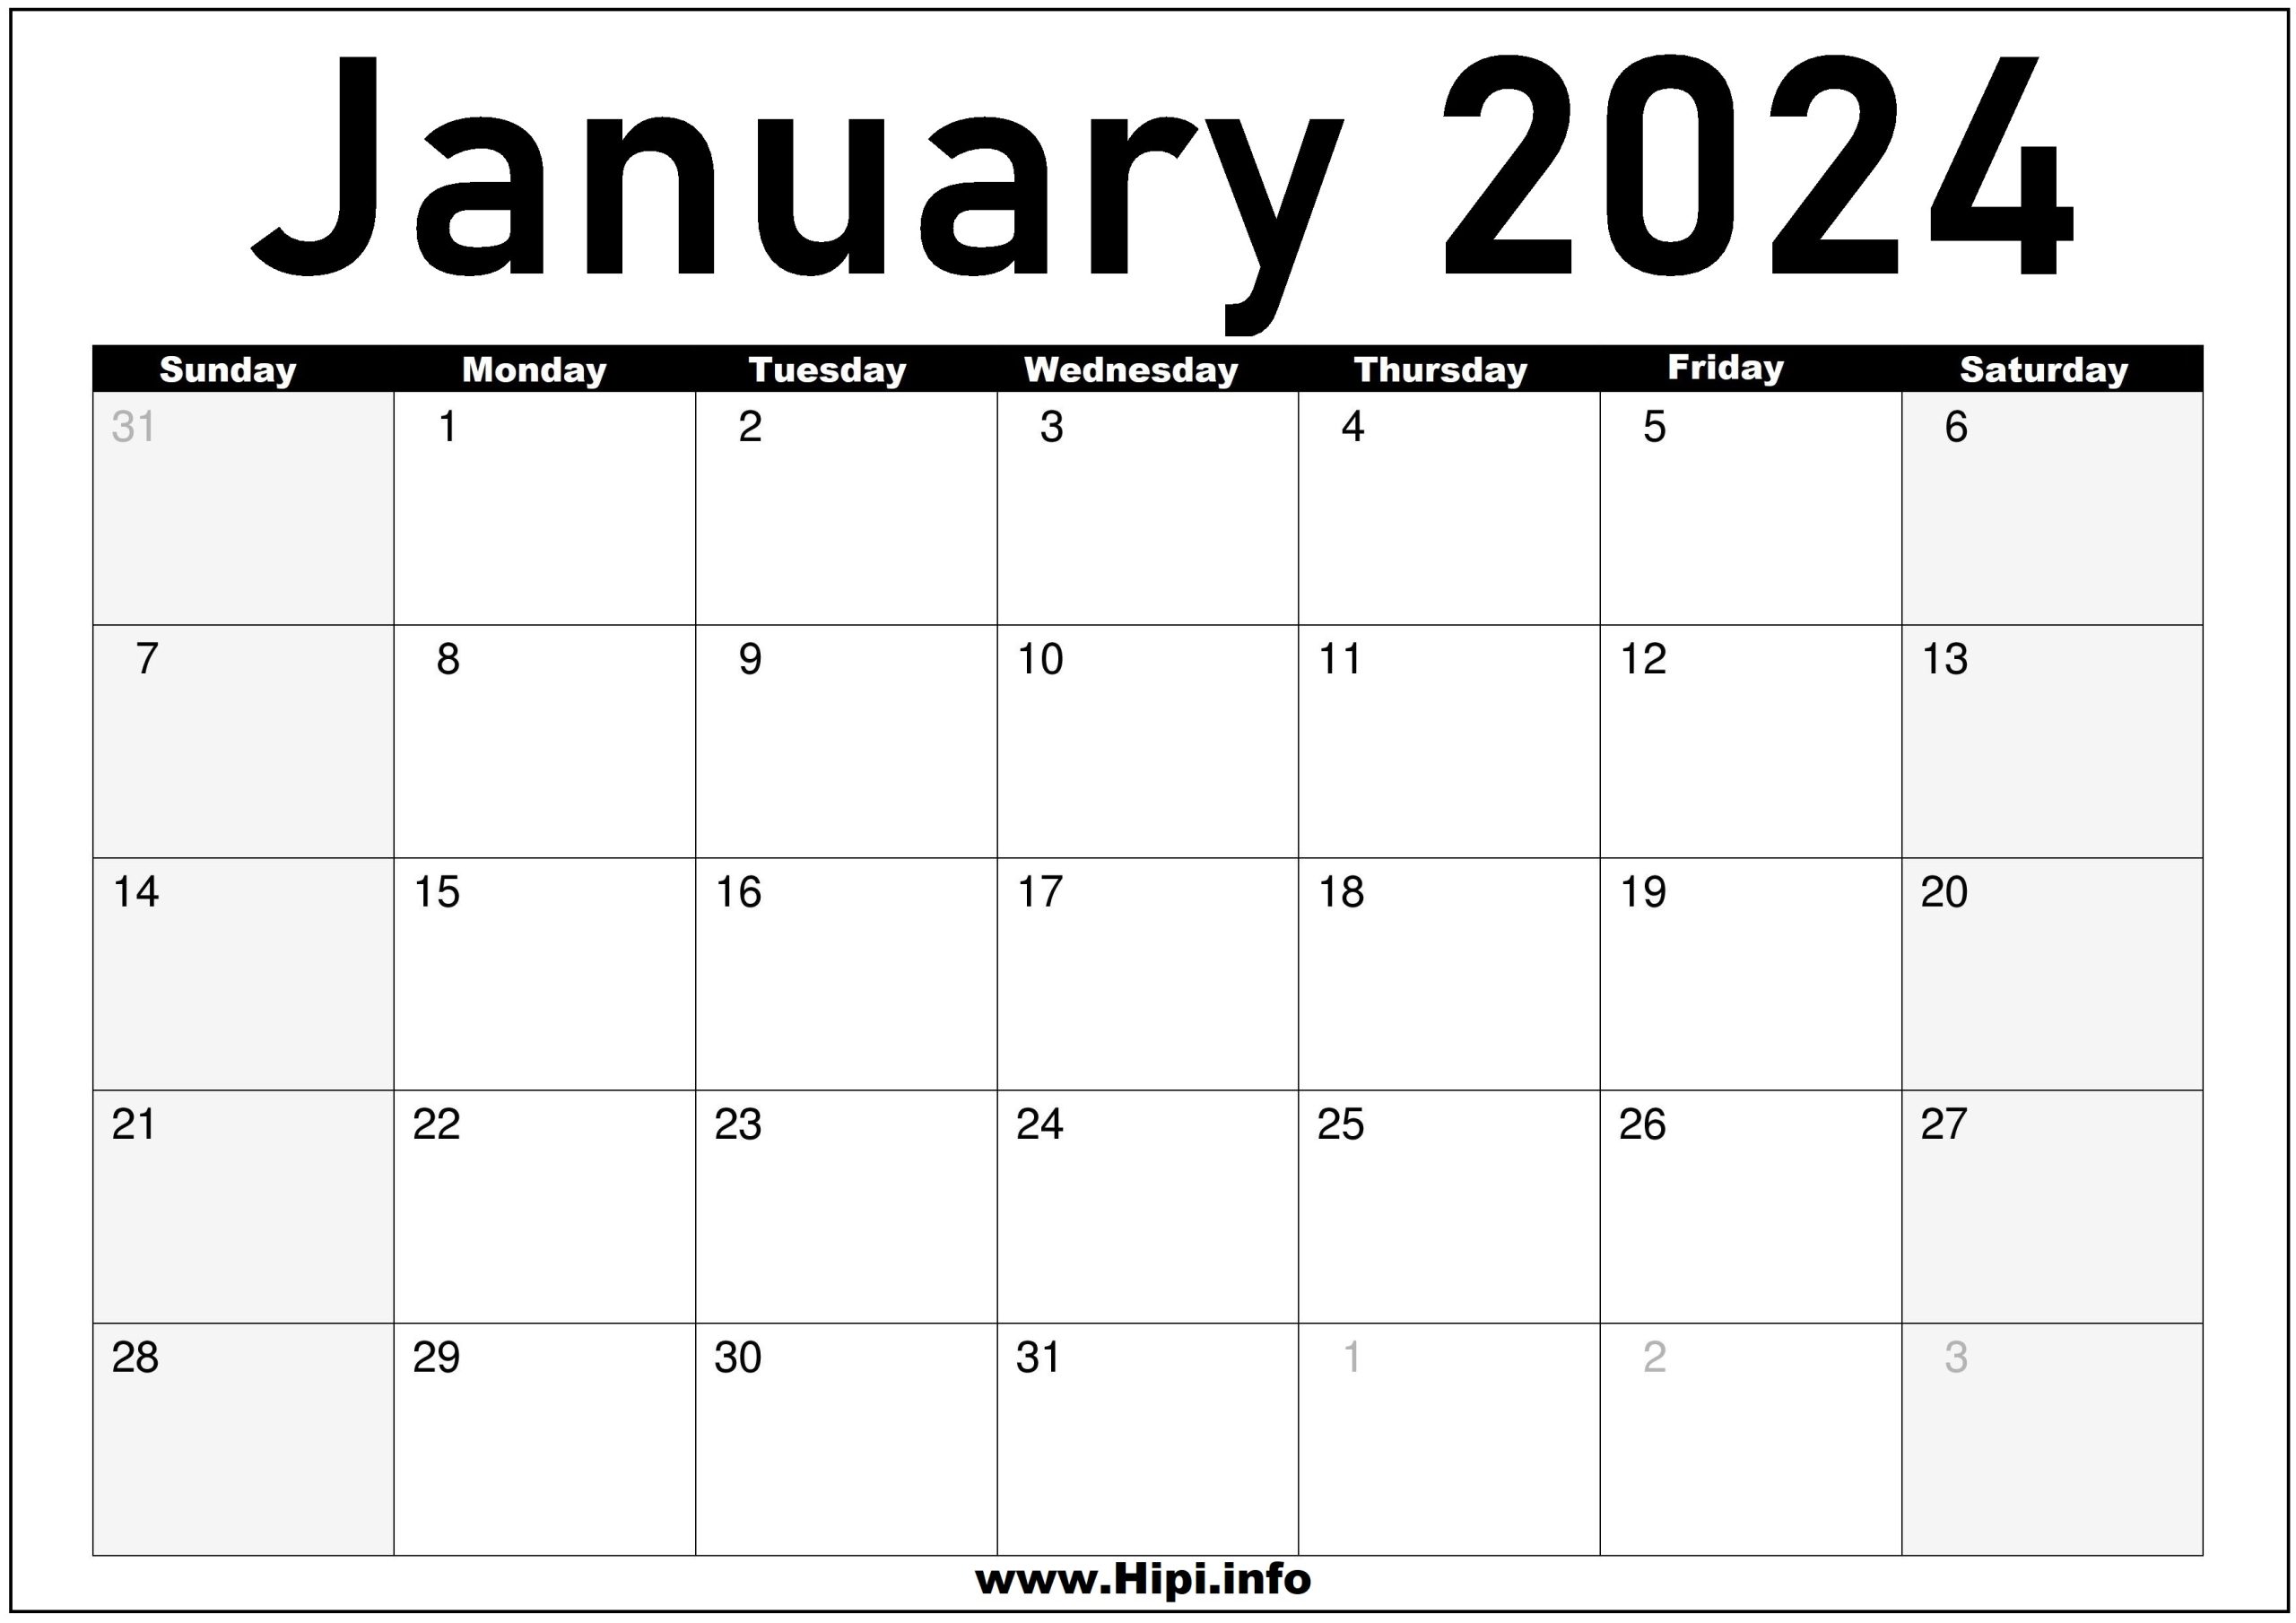 January 2024 Calendar Monthly Hipi info